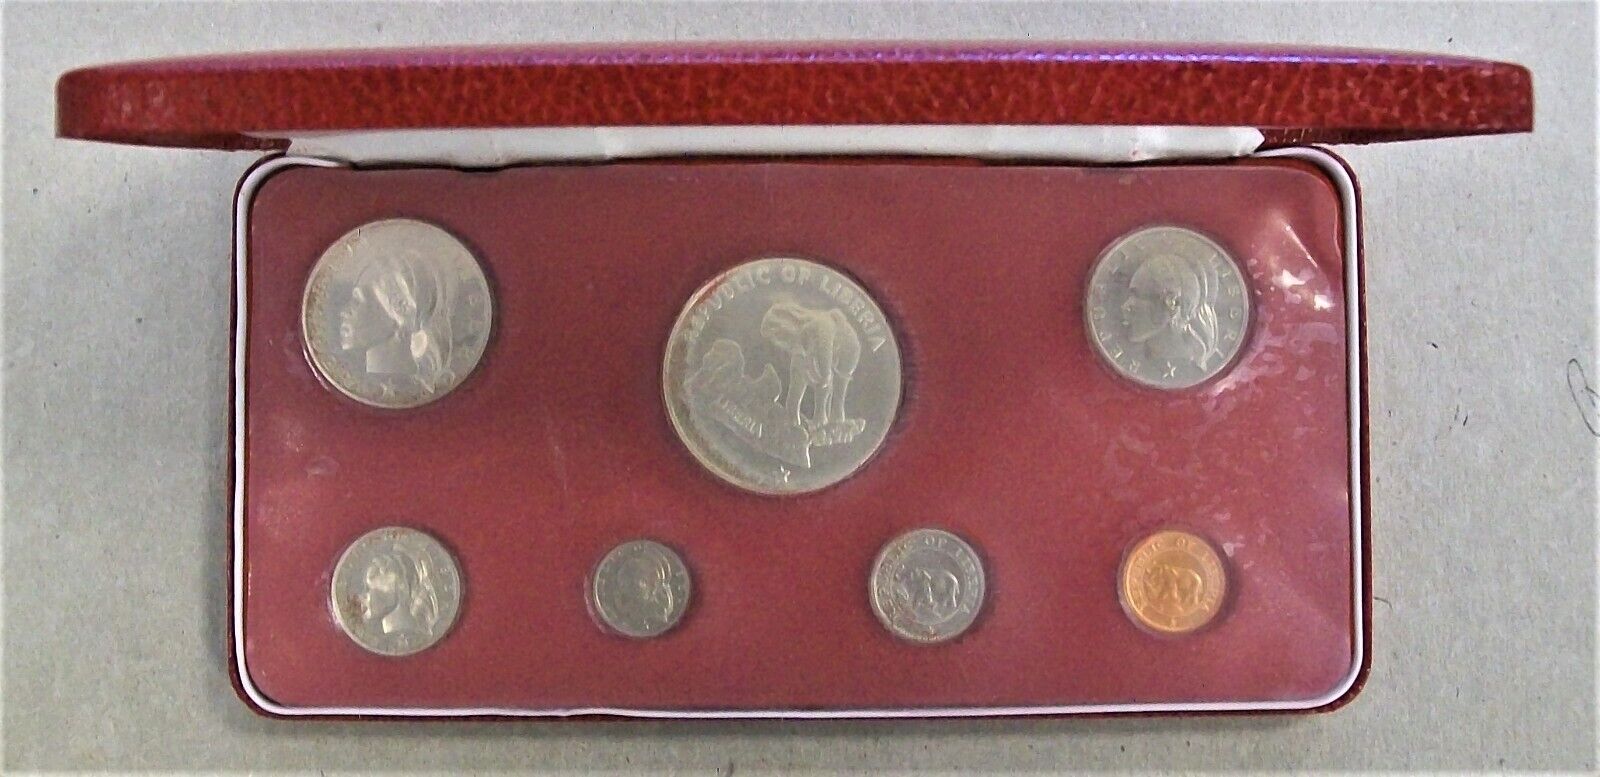 1974 Liberia 7 Coin Proof Set In Original Packaging